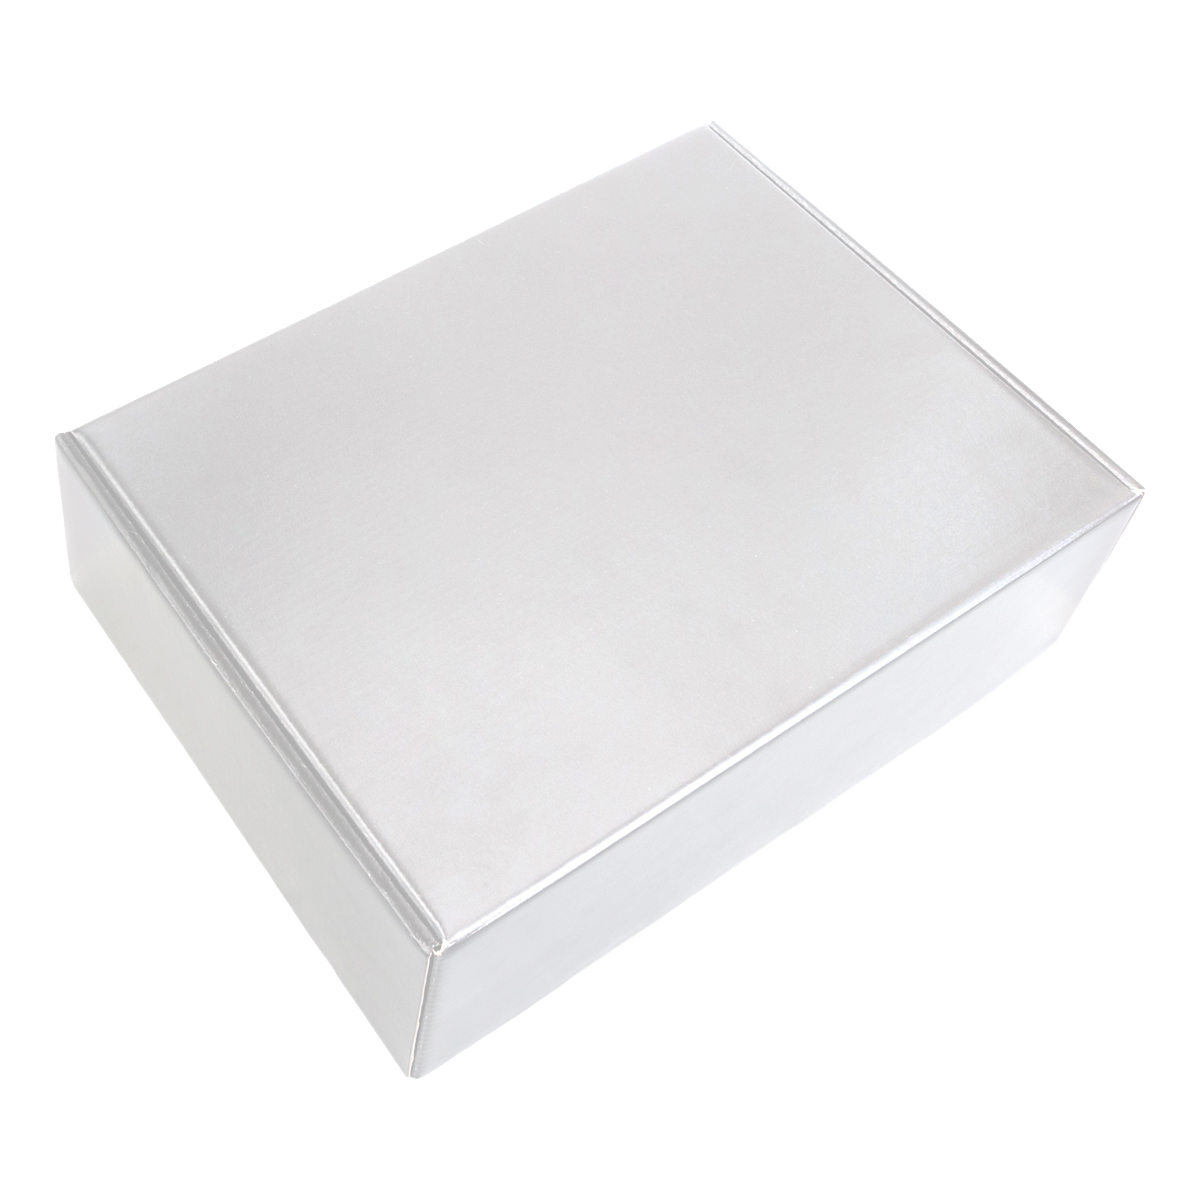 Набор Edge Box E (белый), белый, металл, микрогофрокартон